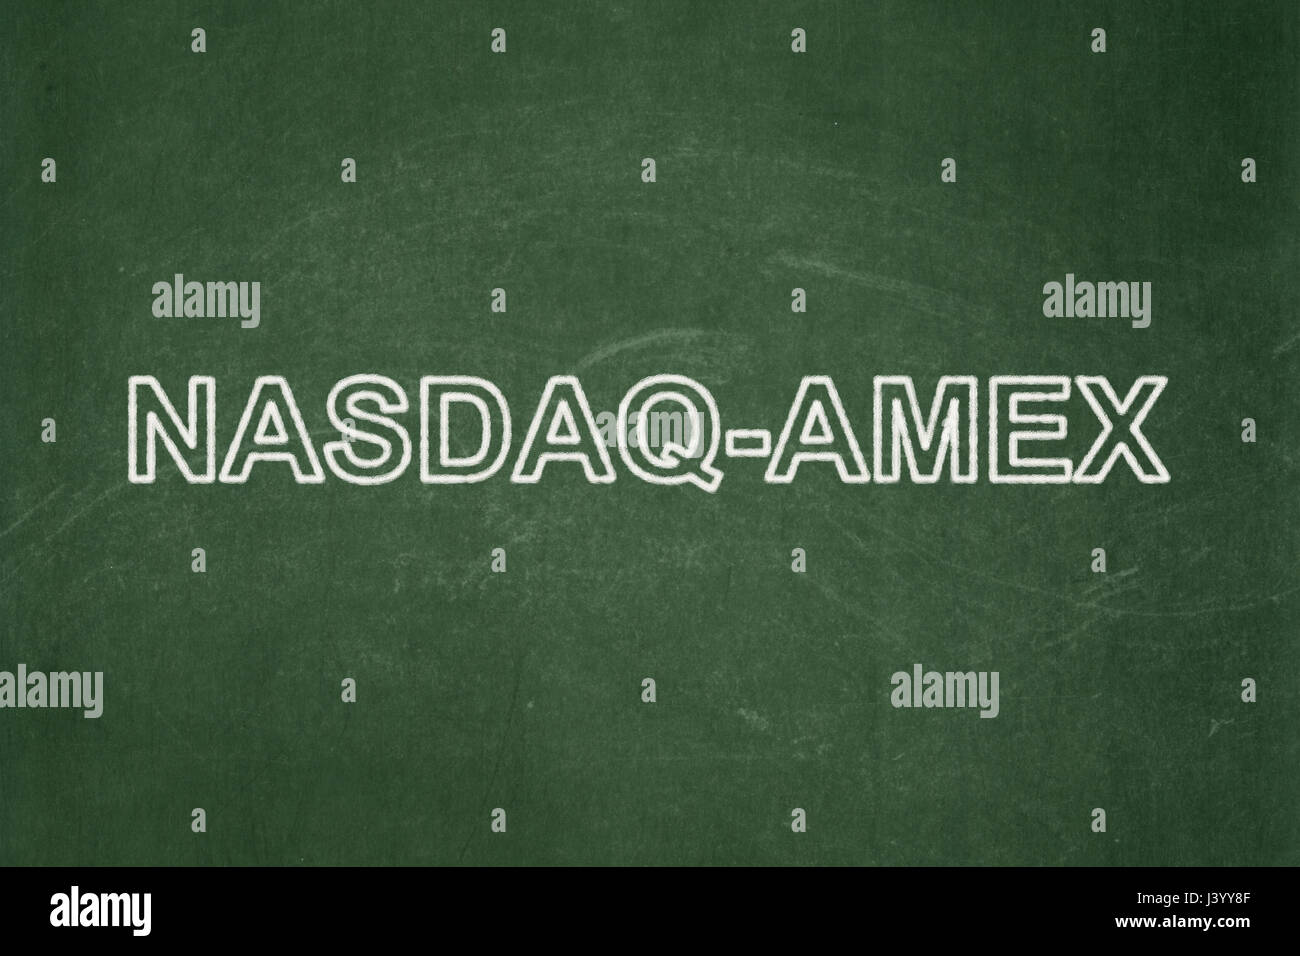 Stock market indexes concept: NASDAQ-AMEX on chalkboard background Stock Photo